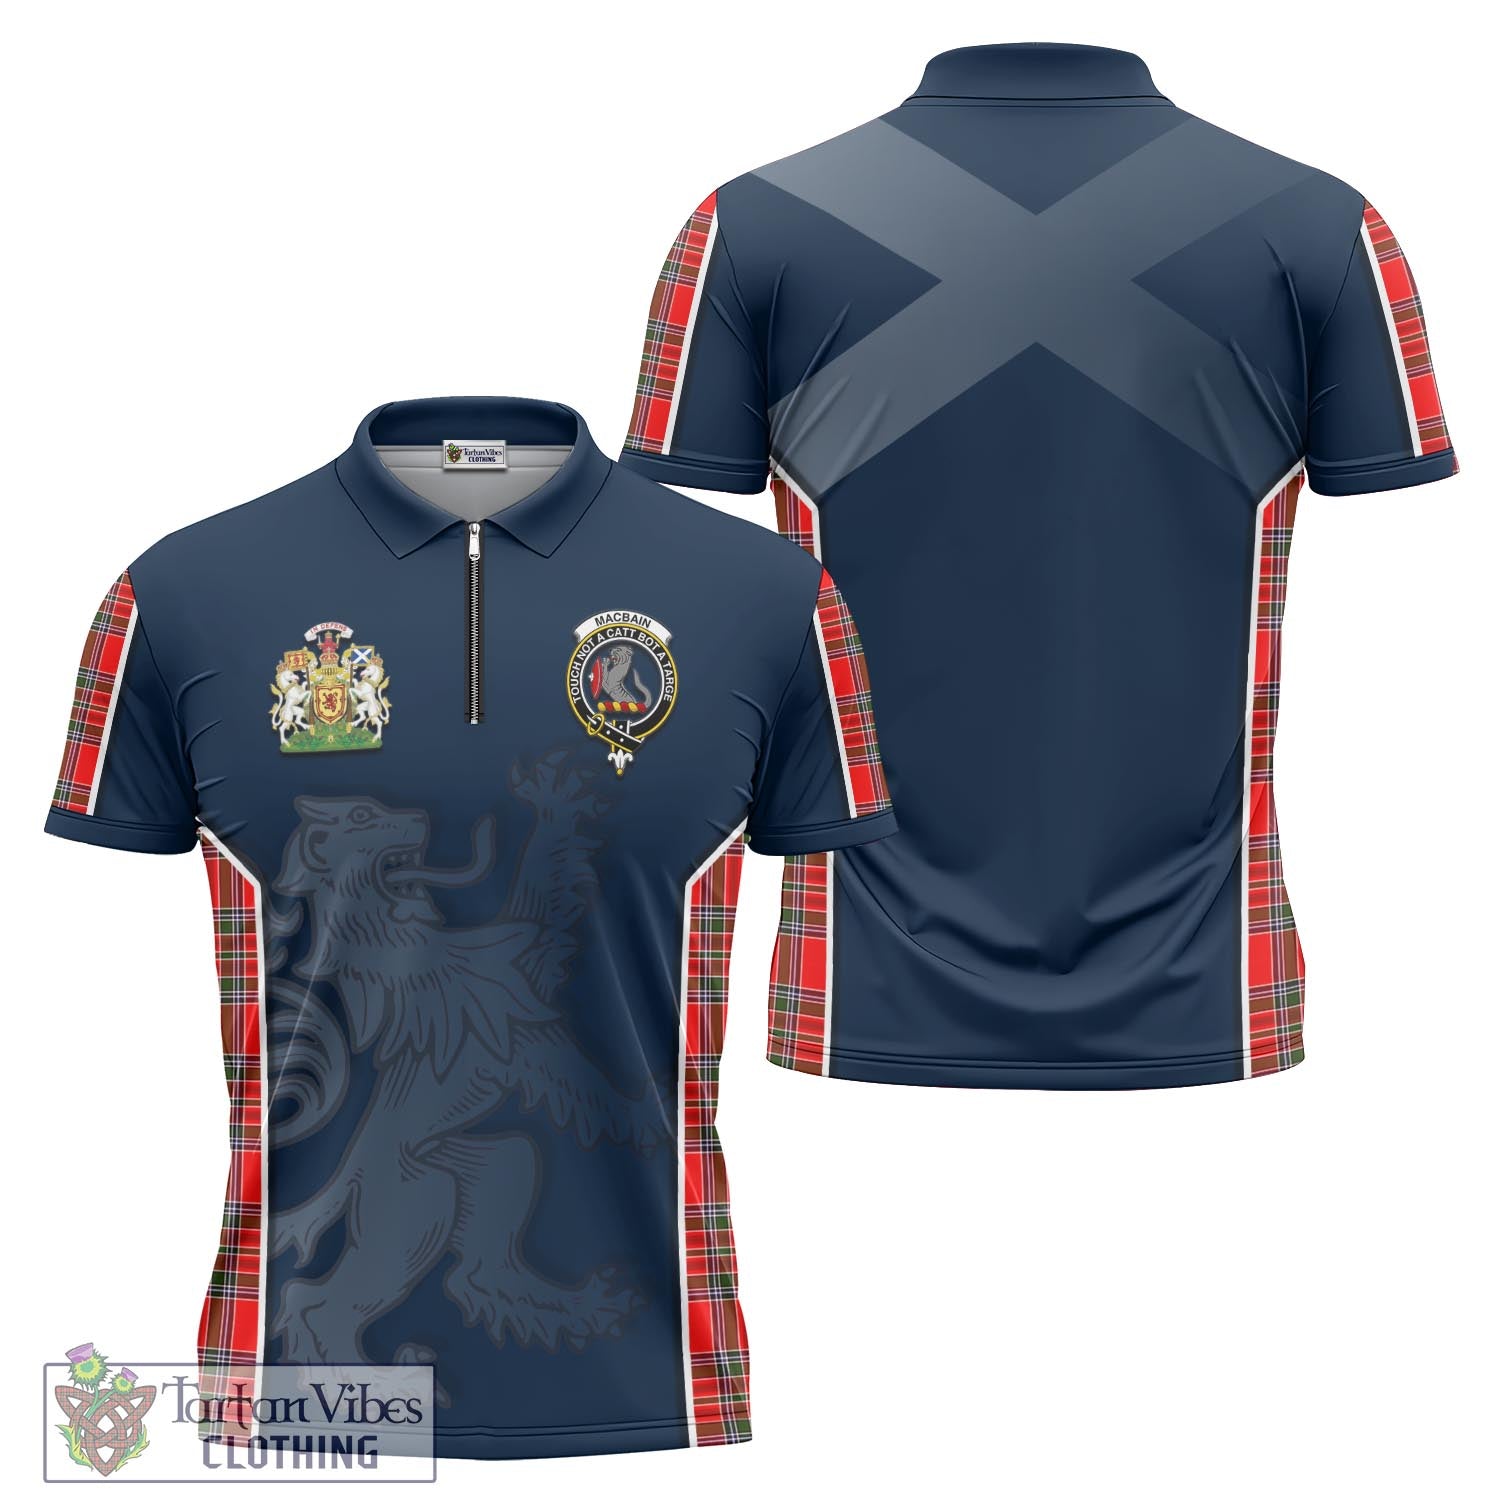 Tartan Vibes Clothing MacBain Tartan Zipper Polo Shirt with Family Crest and Lion Rampant Vibes Sport Style